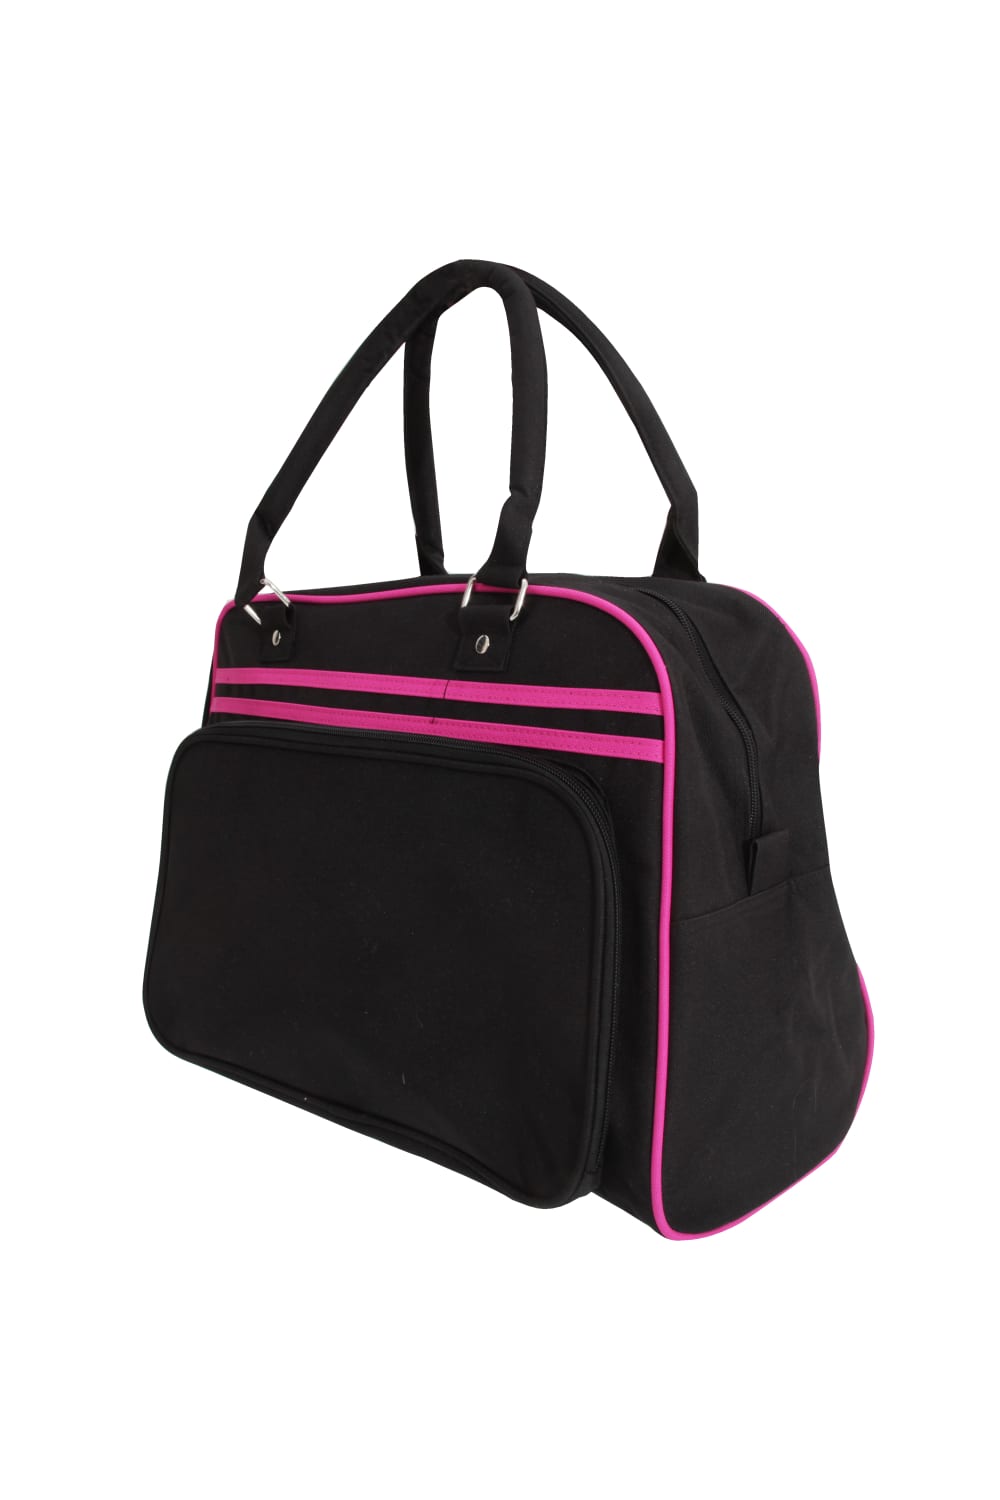 Bagbase Retro Bowling Bag (6 Gallons) (Pack of 2) (Black/Fuchia) (One Size)